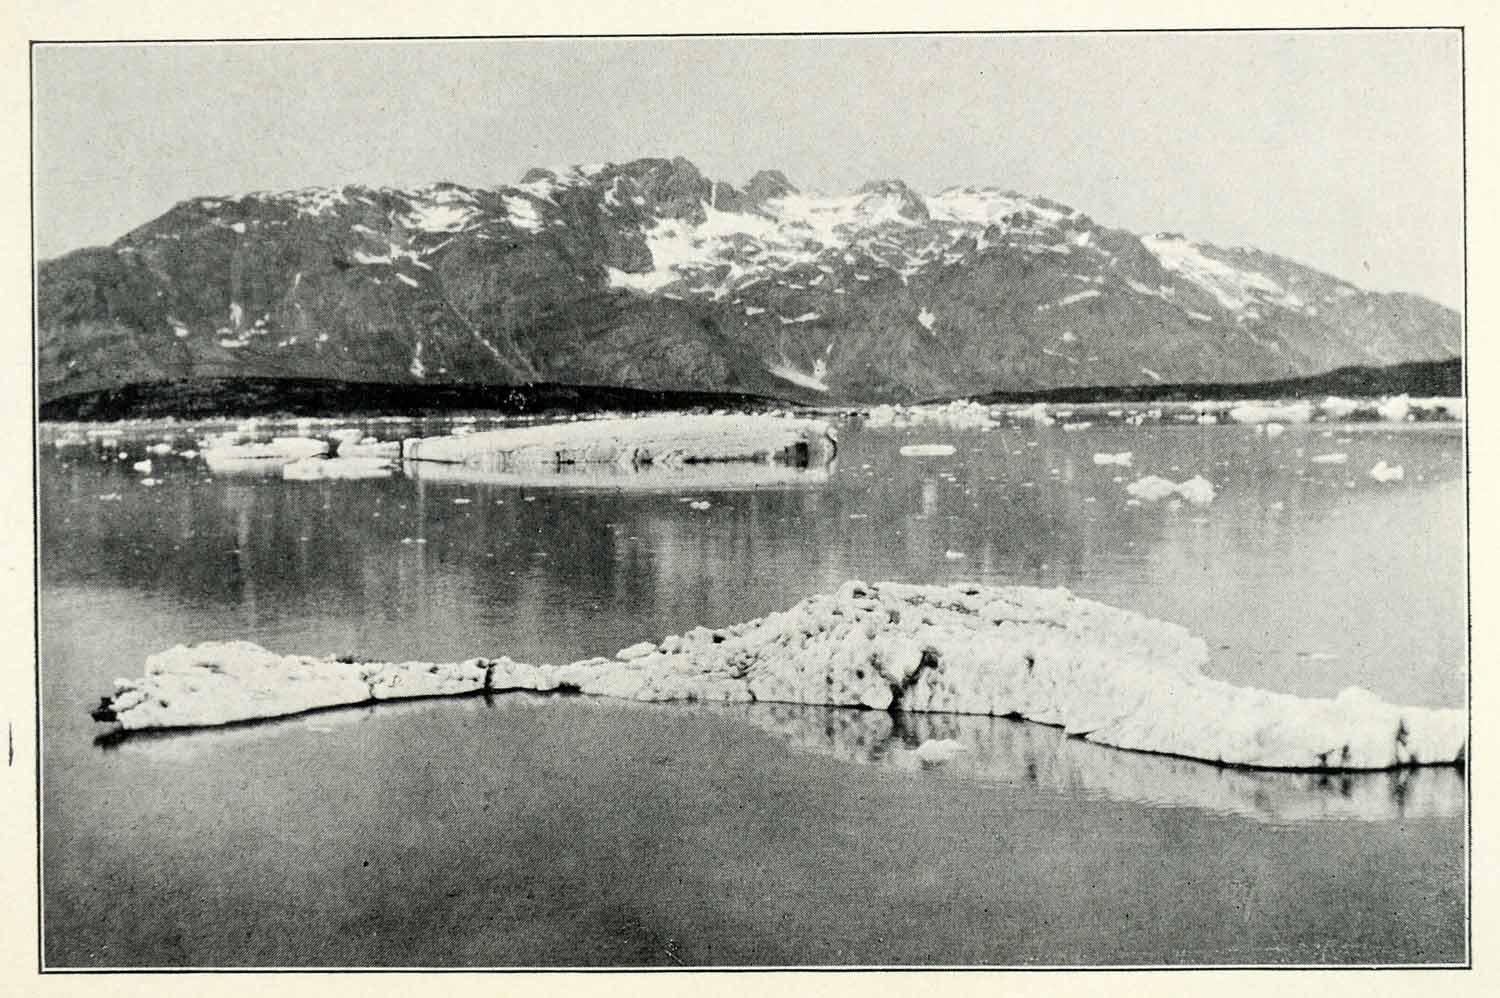 1901 Print Glacier Bay National Park Alaska Iceberg Mountain Nature Ocean XGU5